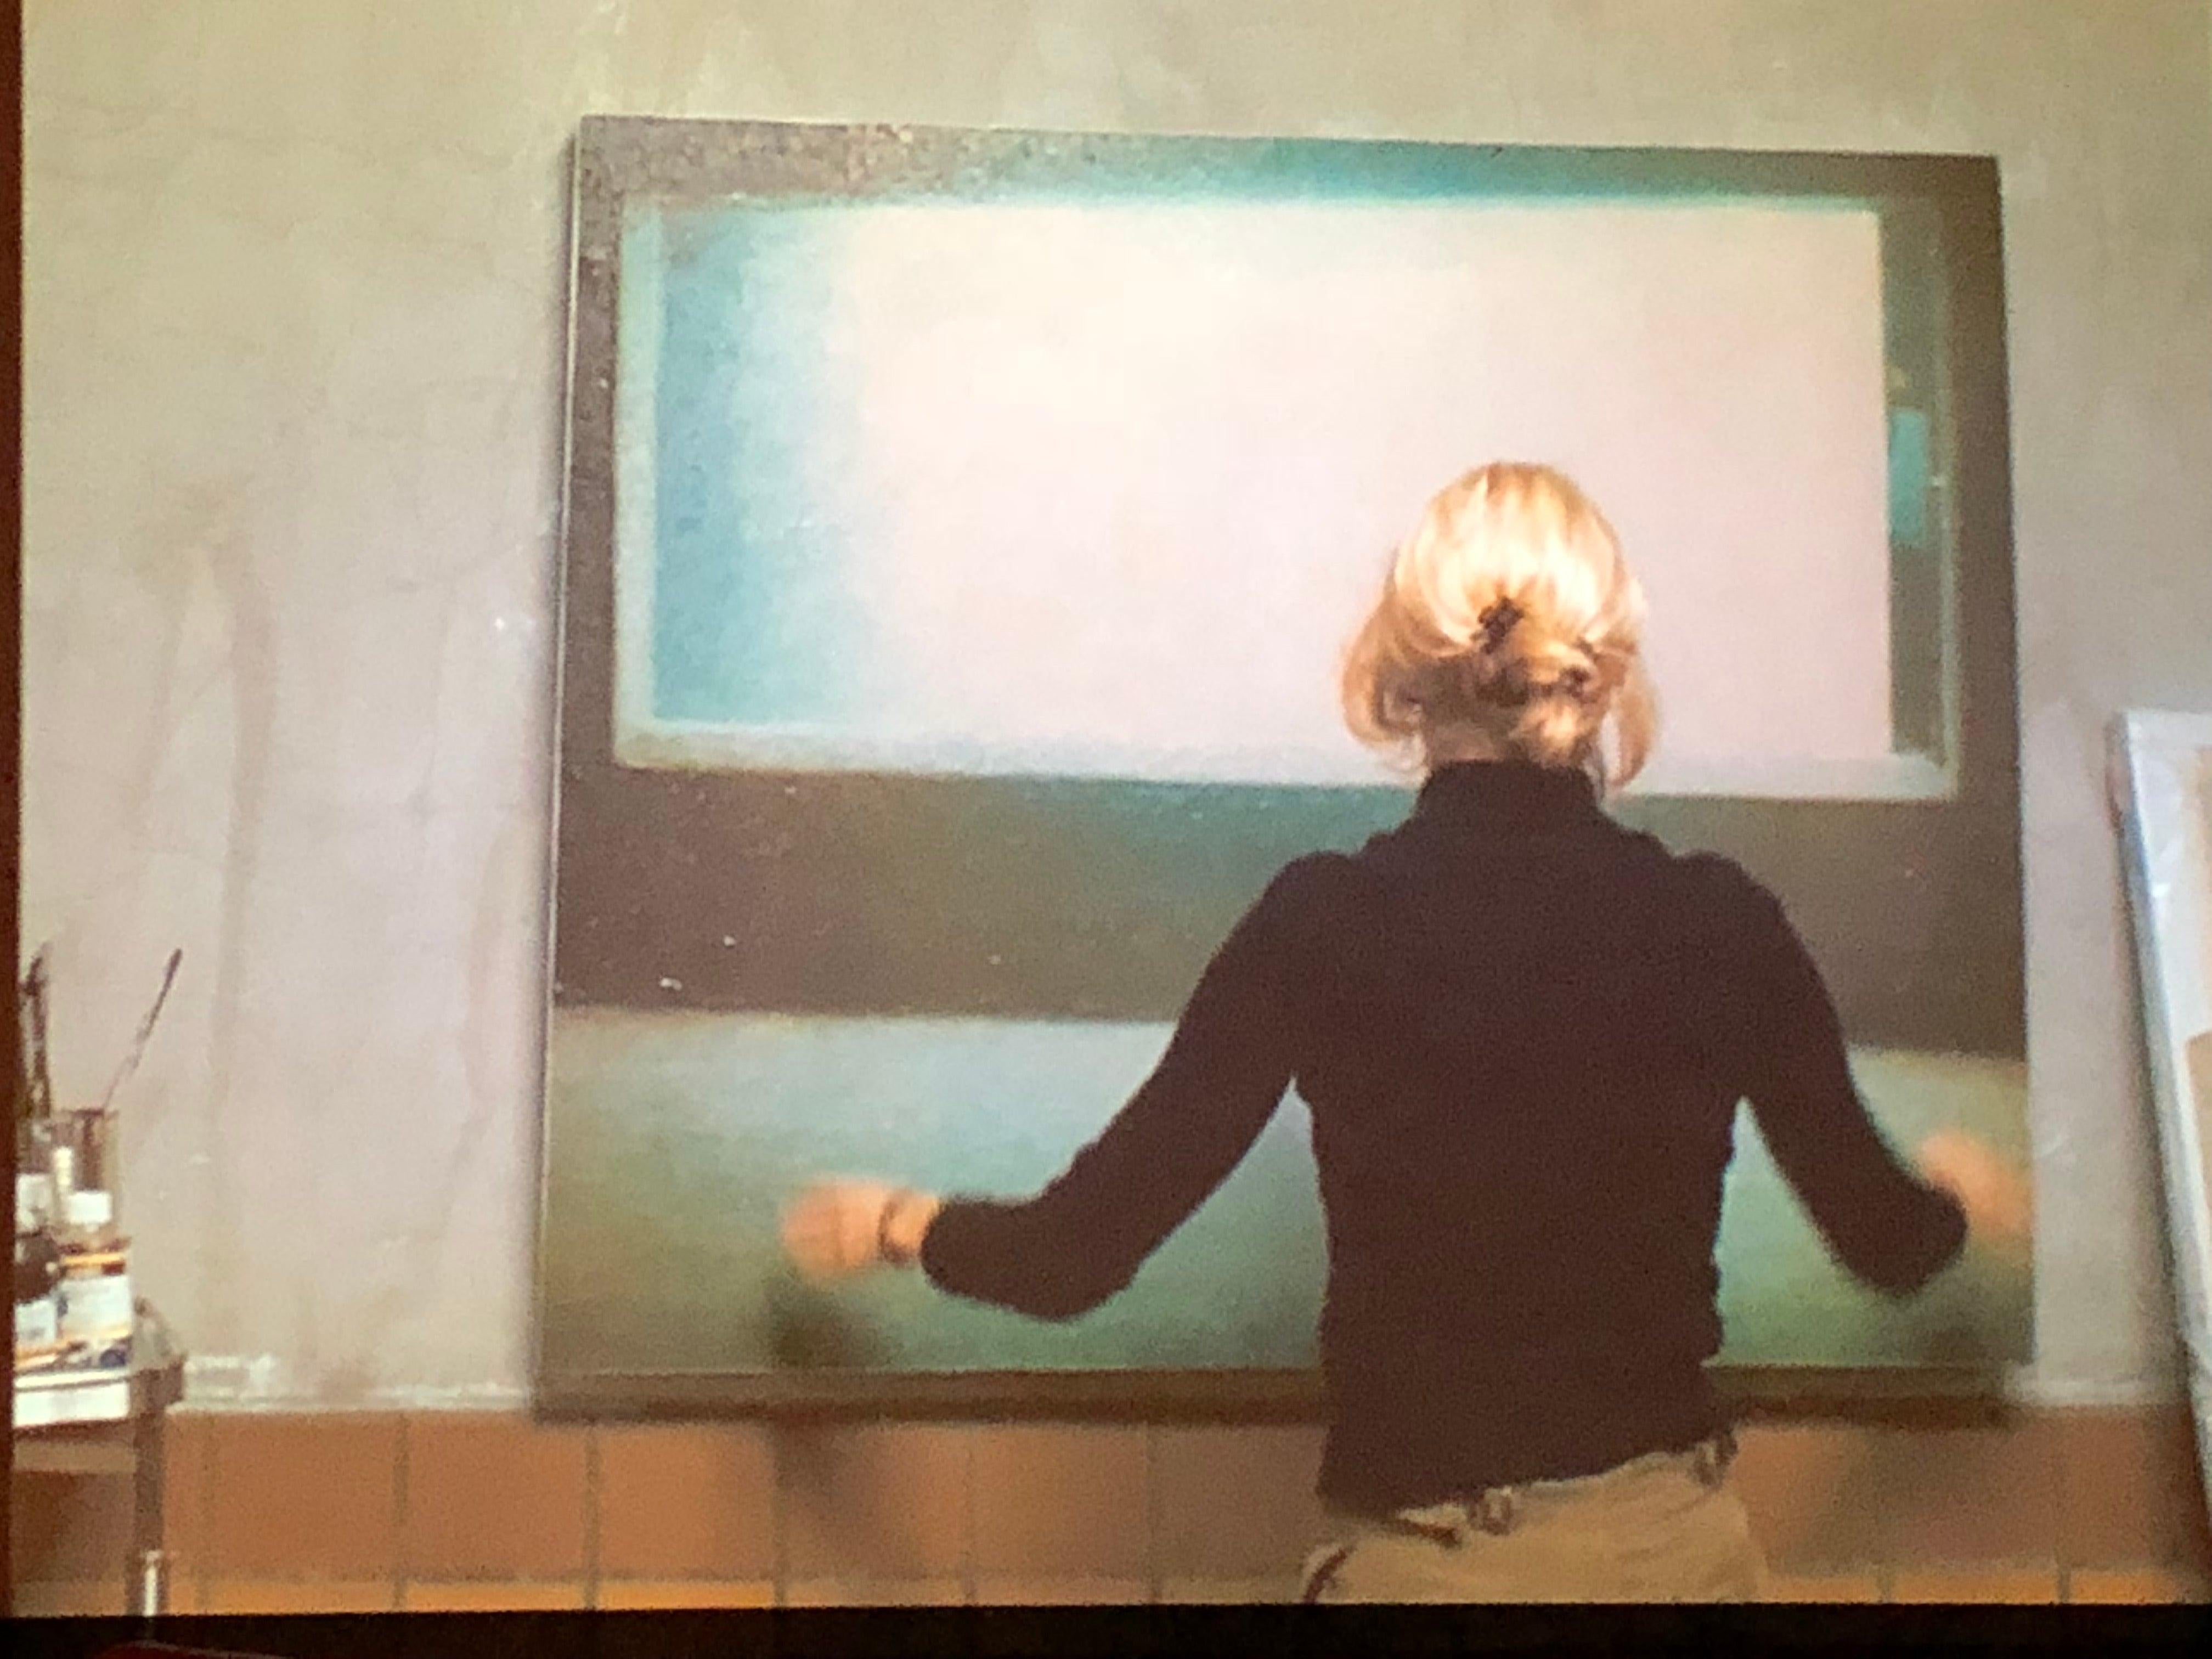 Paravent Aquairium Mind Screen (Stay) - Polaroid, analogique, contemporain, Coney Island - Photograph de Stefanie Schneider